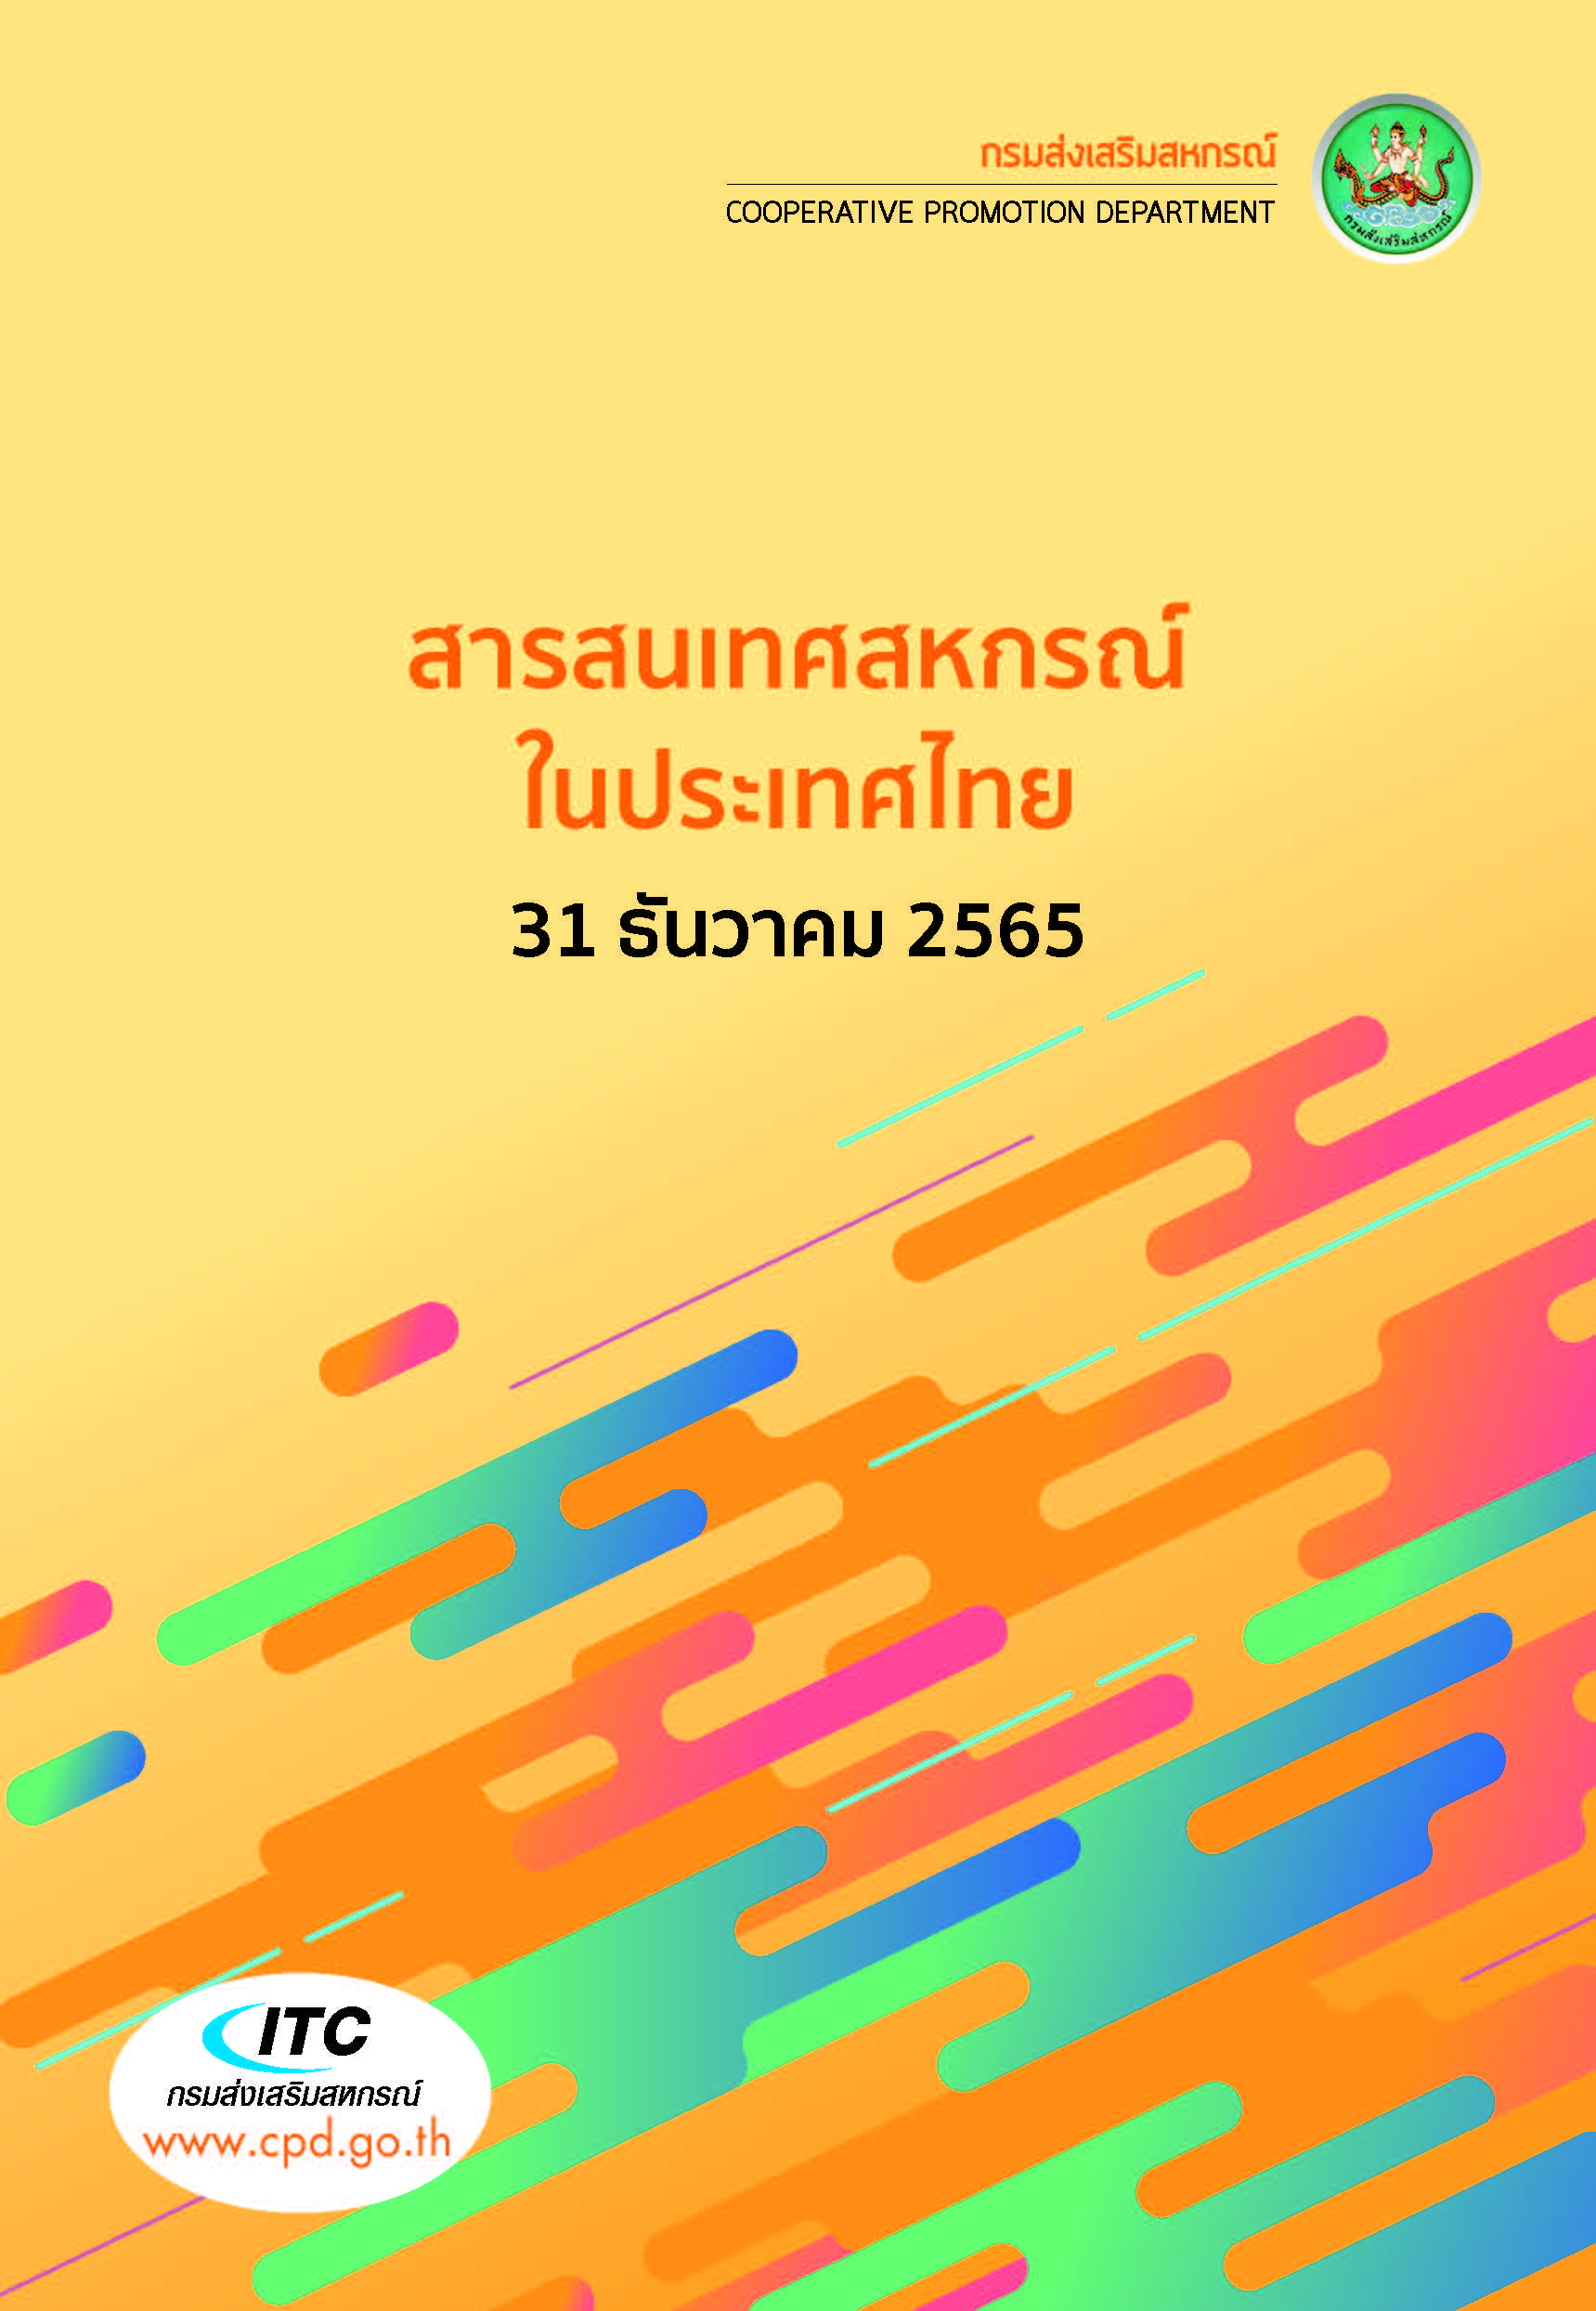 e book coop thai 311265